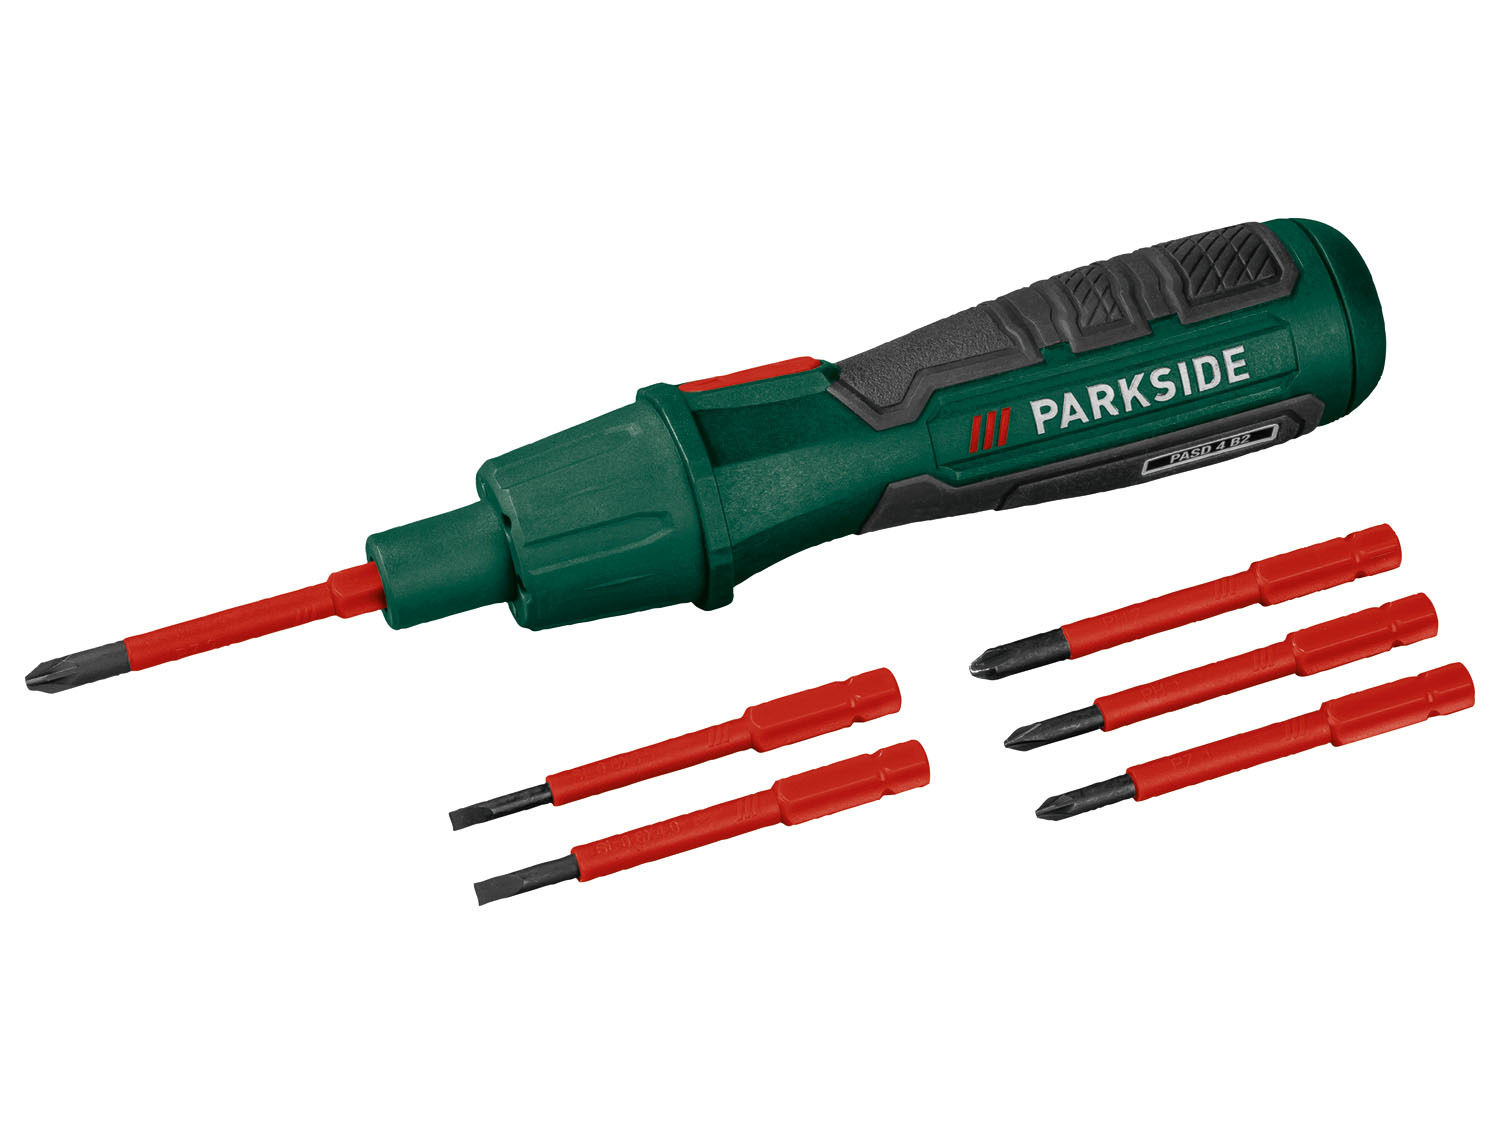 PARKSIDE® 4V Akku- Schraubendreher »PASD 4 B2« mit 6 isolierten Spezial-Bits